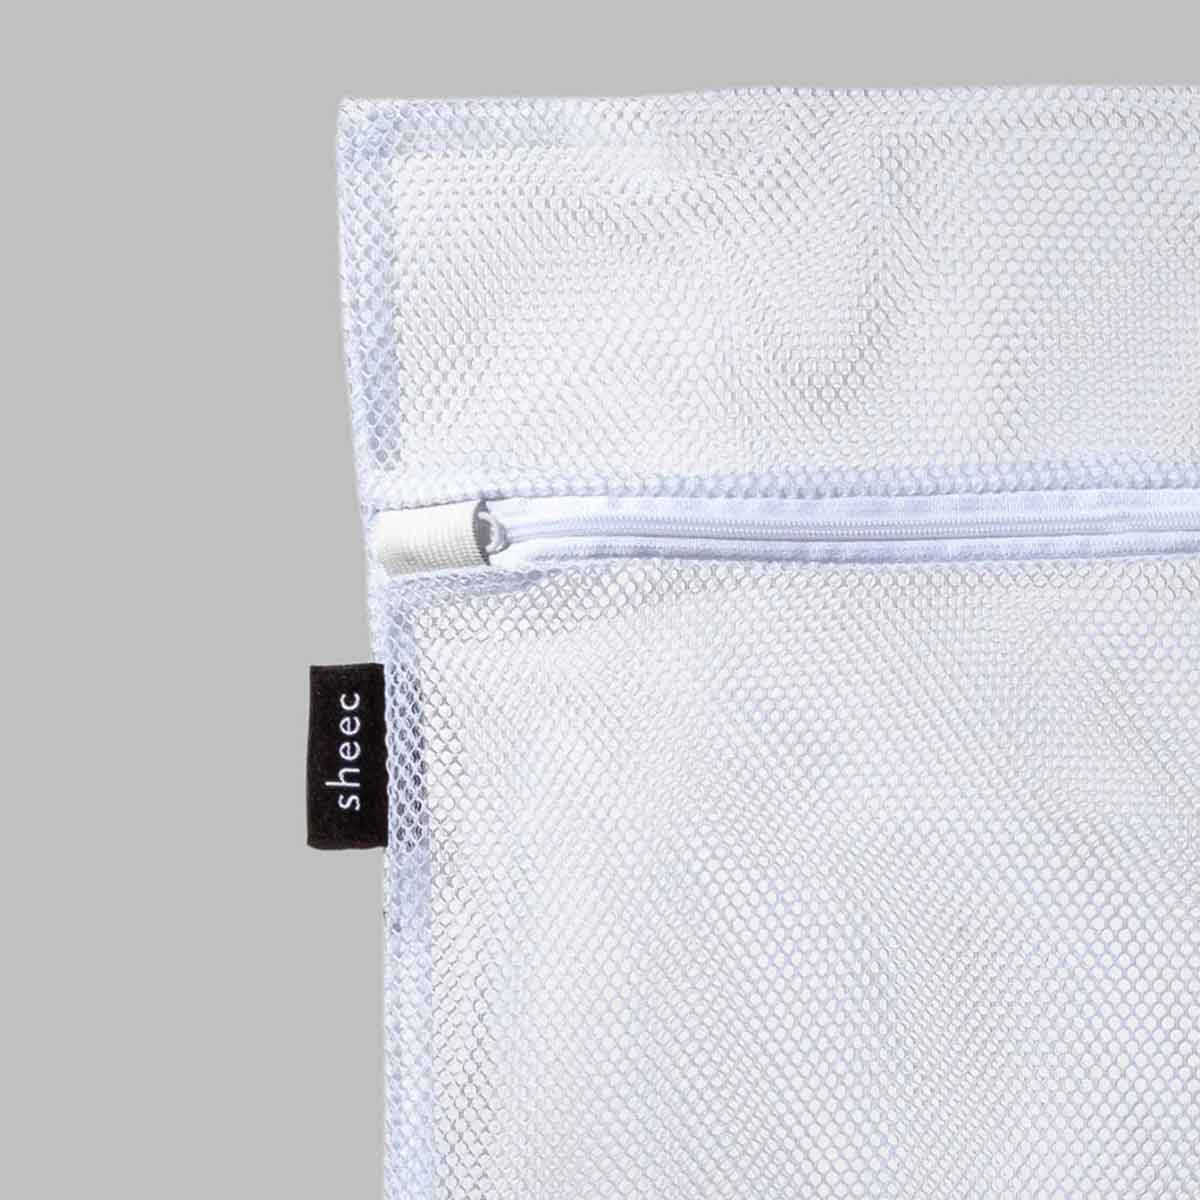 ENJOY Protecting Mesh Bag laundry Basket Sock Underwear Washing Lingerie  Wash Thickened Double Layer Zippered Mesh Laundry Bag